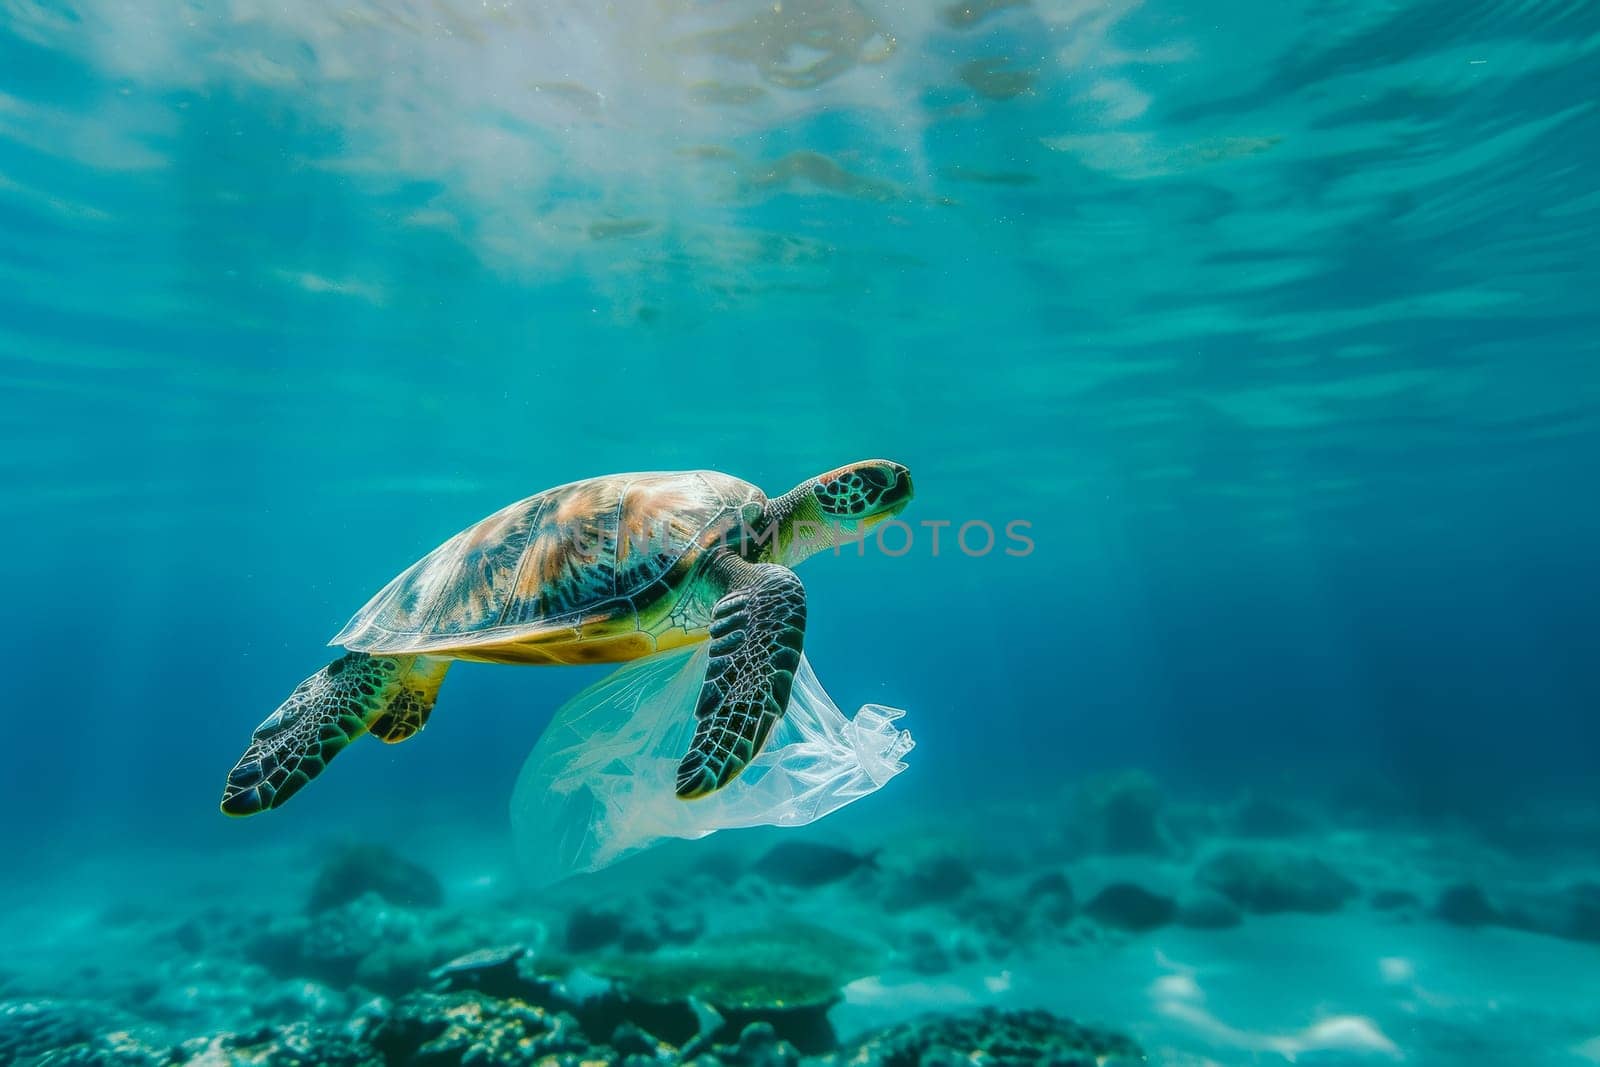 Turtle Swimming Over Plastic Bag in Ocean by vladimka